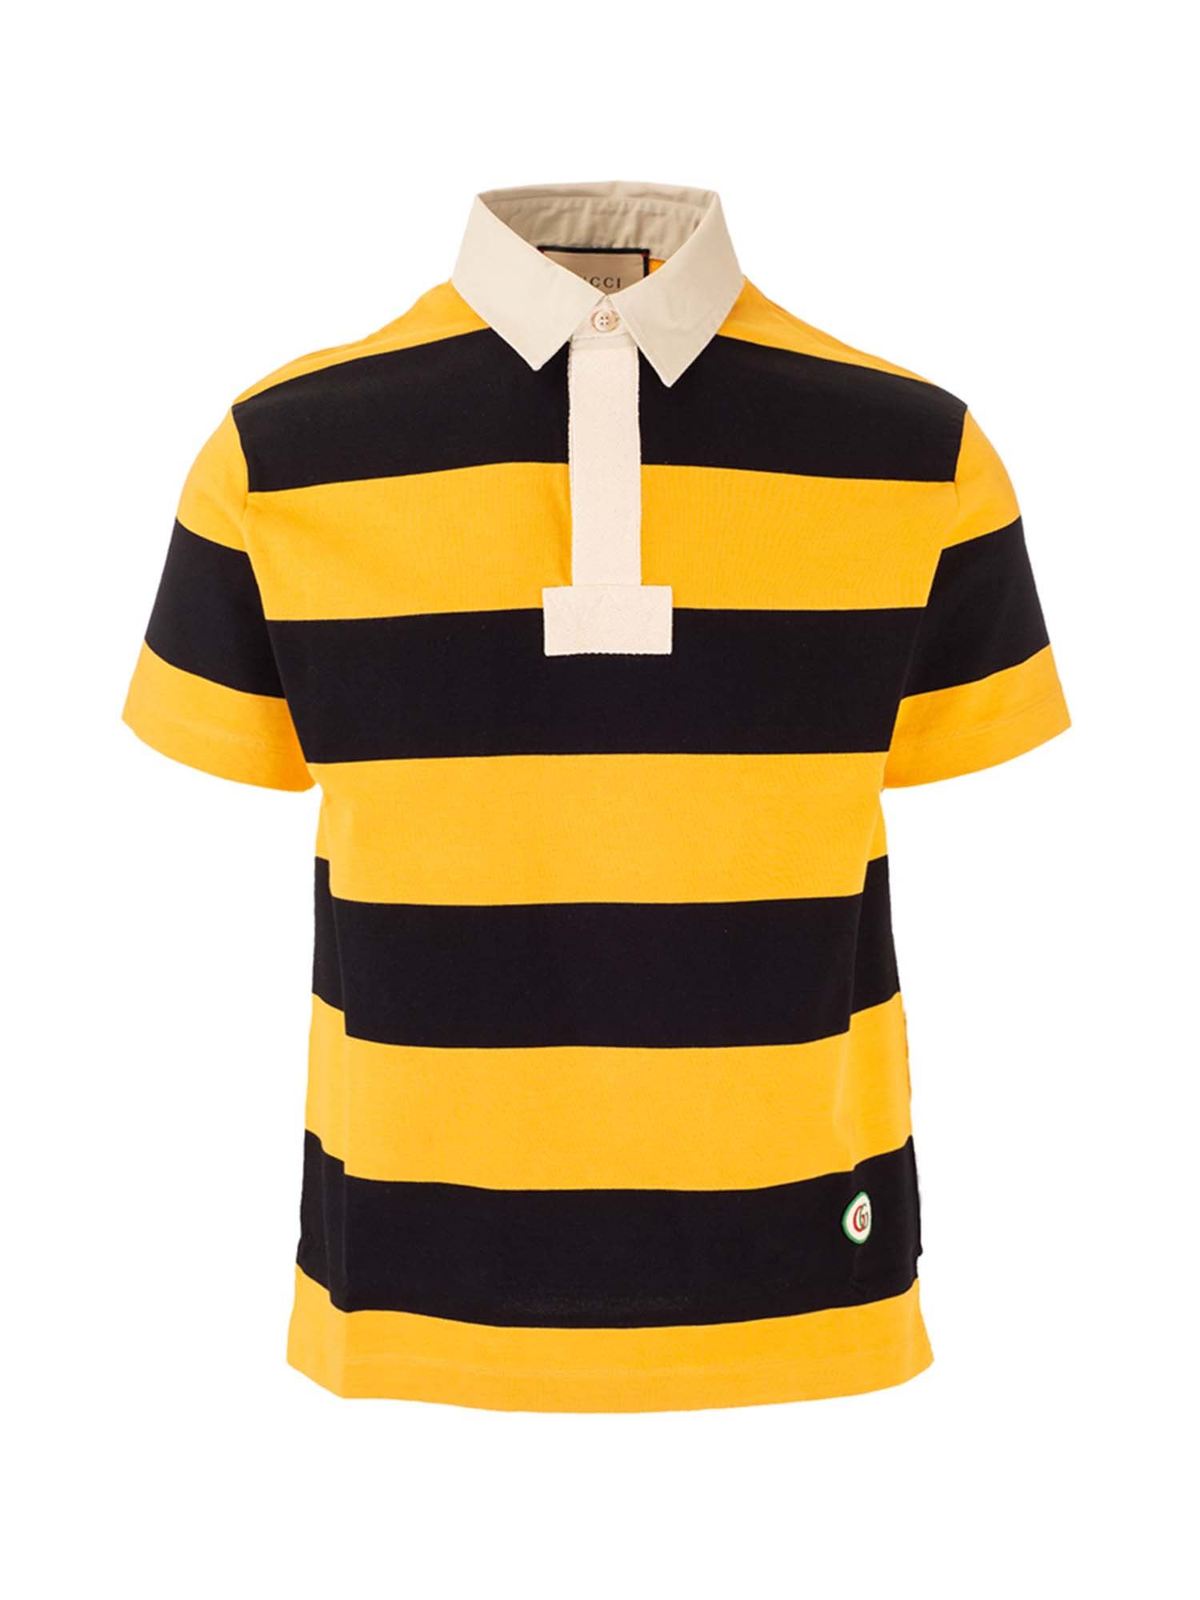 Alcatraz Island pille sammensatte Polo shirts Gucci - Striped polo shirt in yellow and black - 645251XJC6F7121